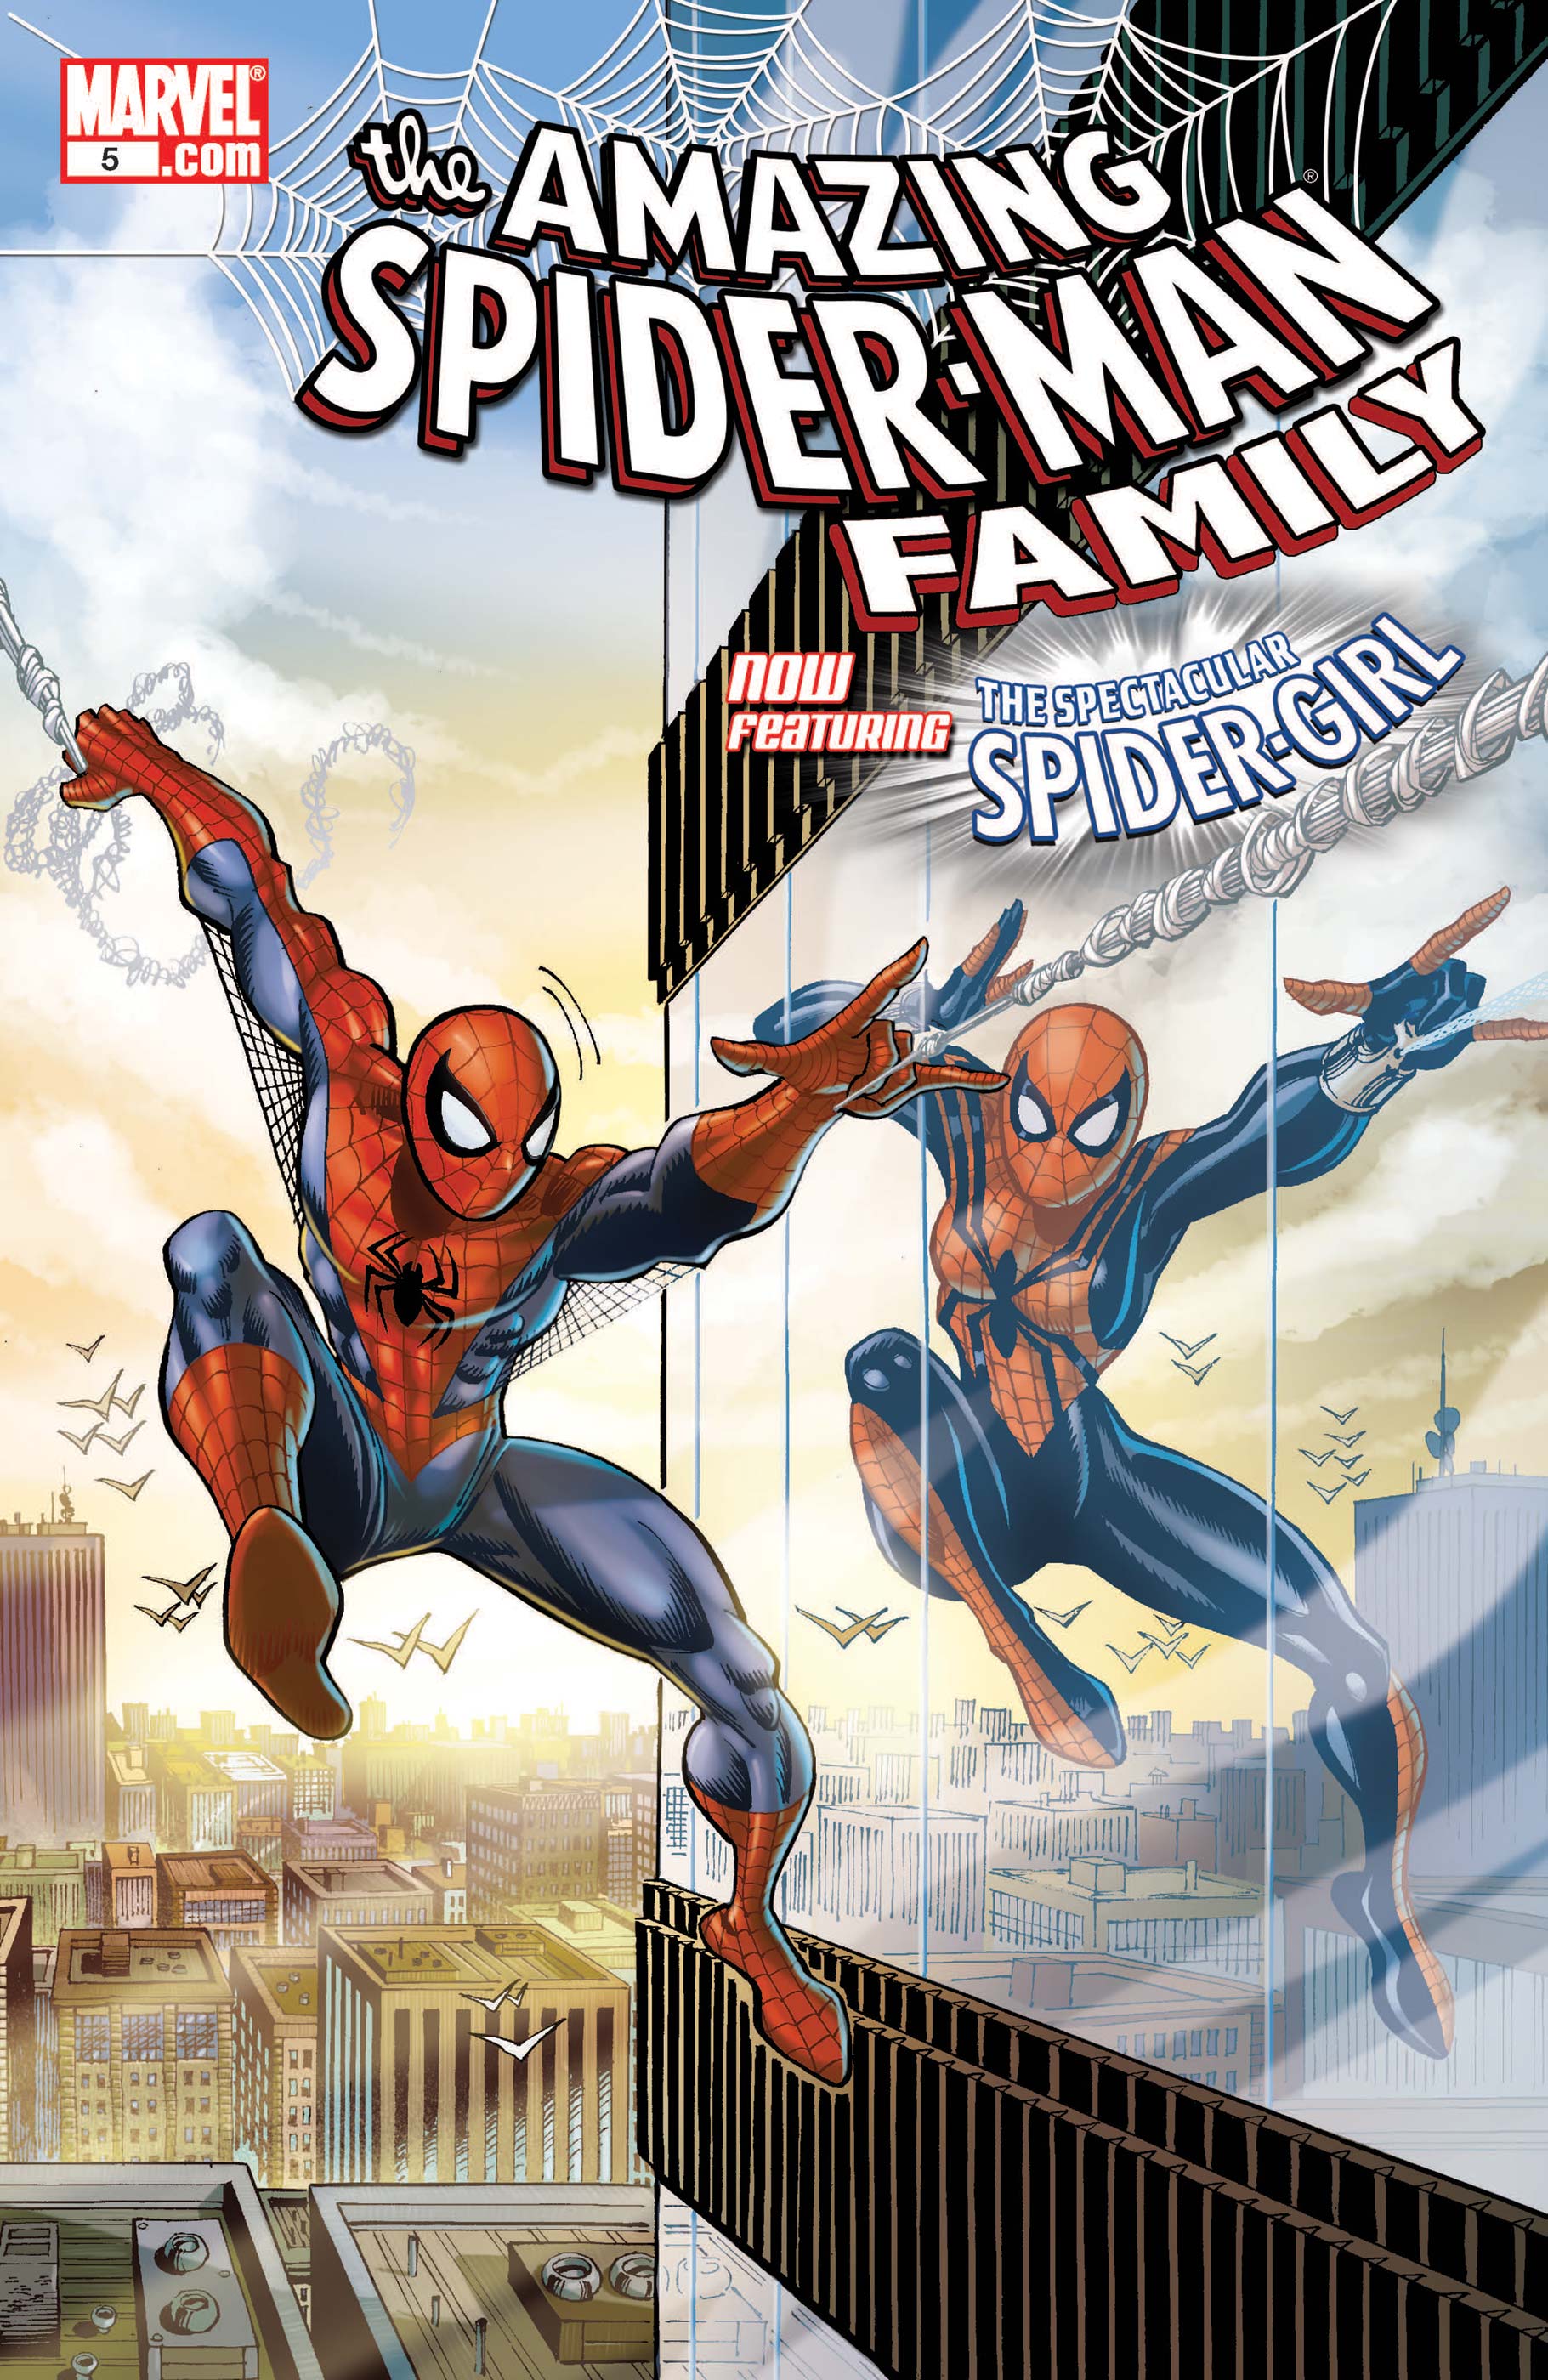 Amazing Spider-Man Family (2008) #5